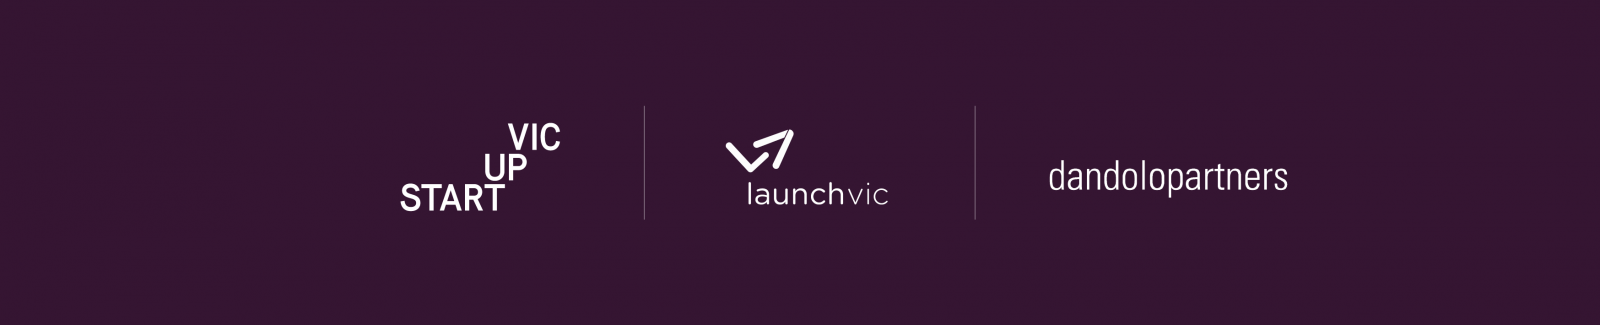 Startup Vic logo, LaunchVic logo, dandolo partners logo